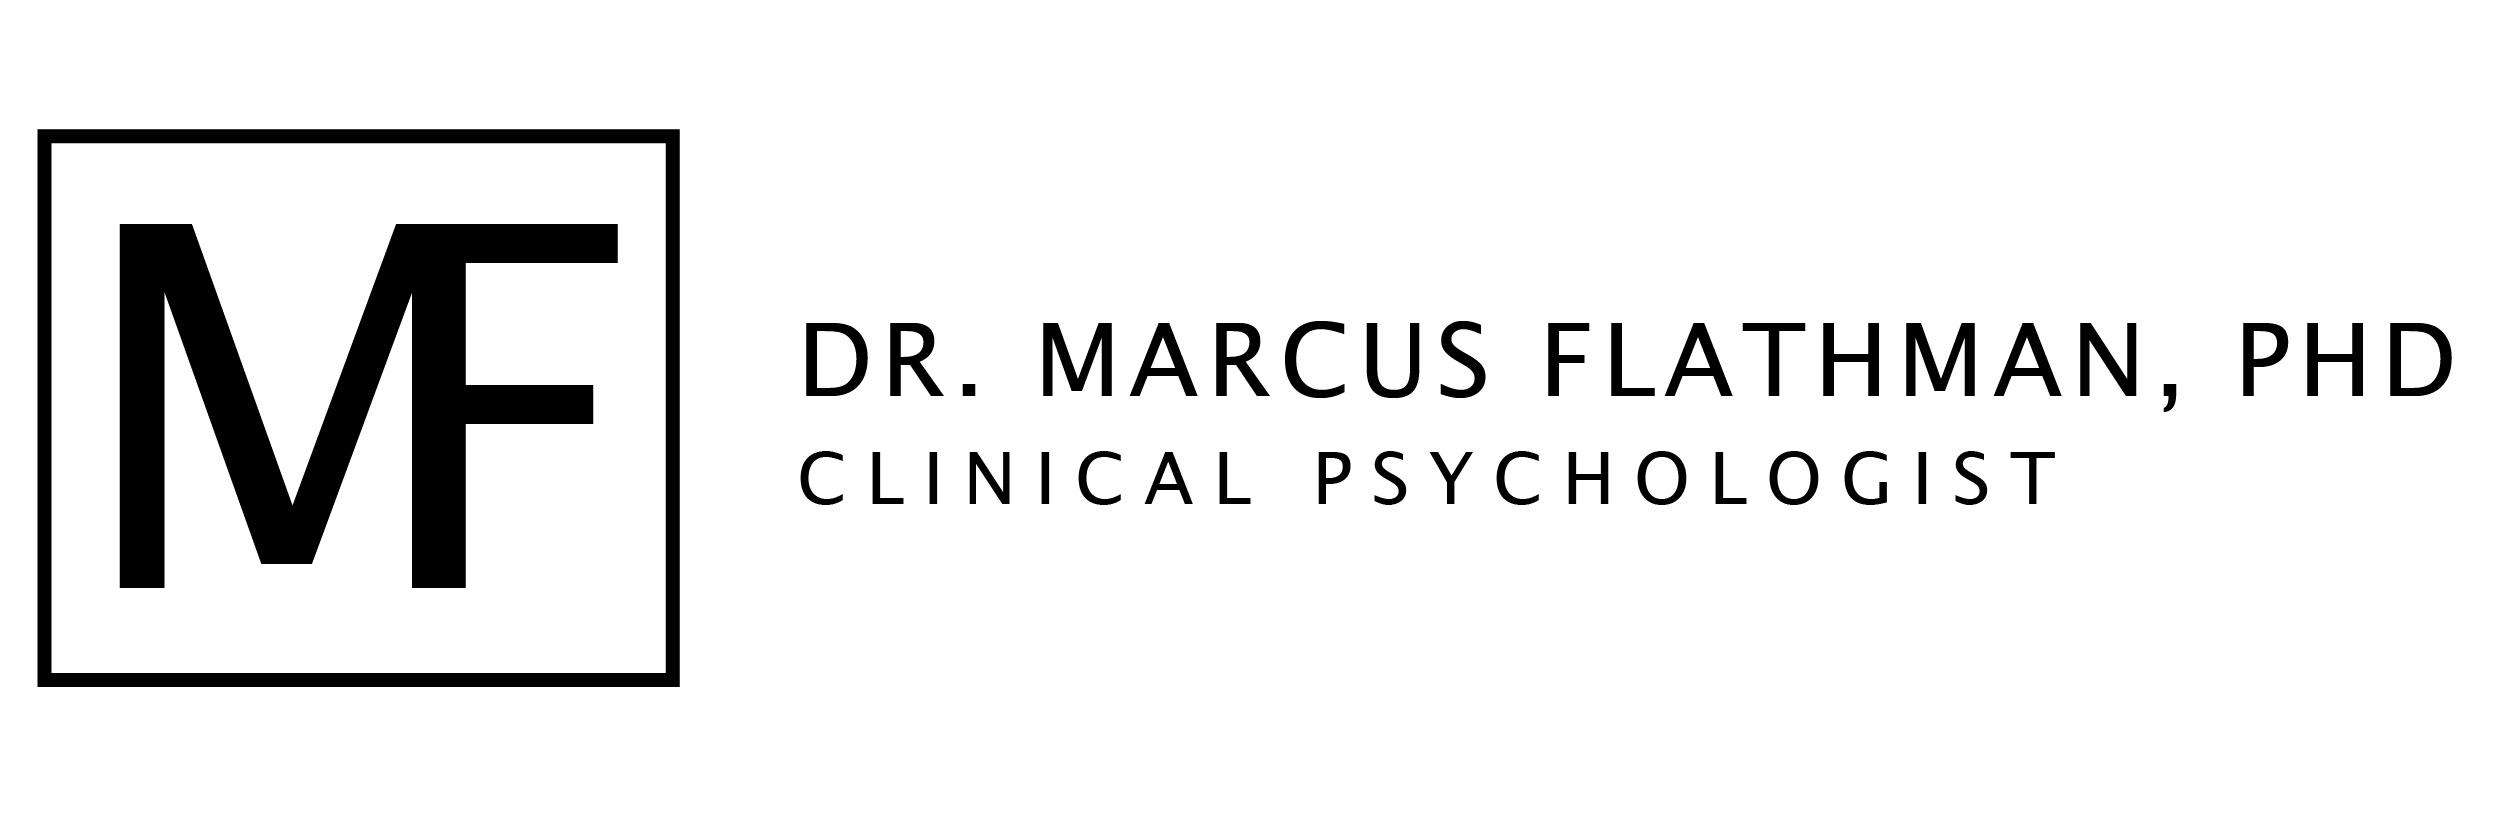 Dr. Marcus Flathman, PhD